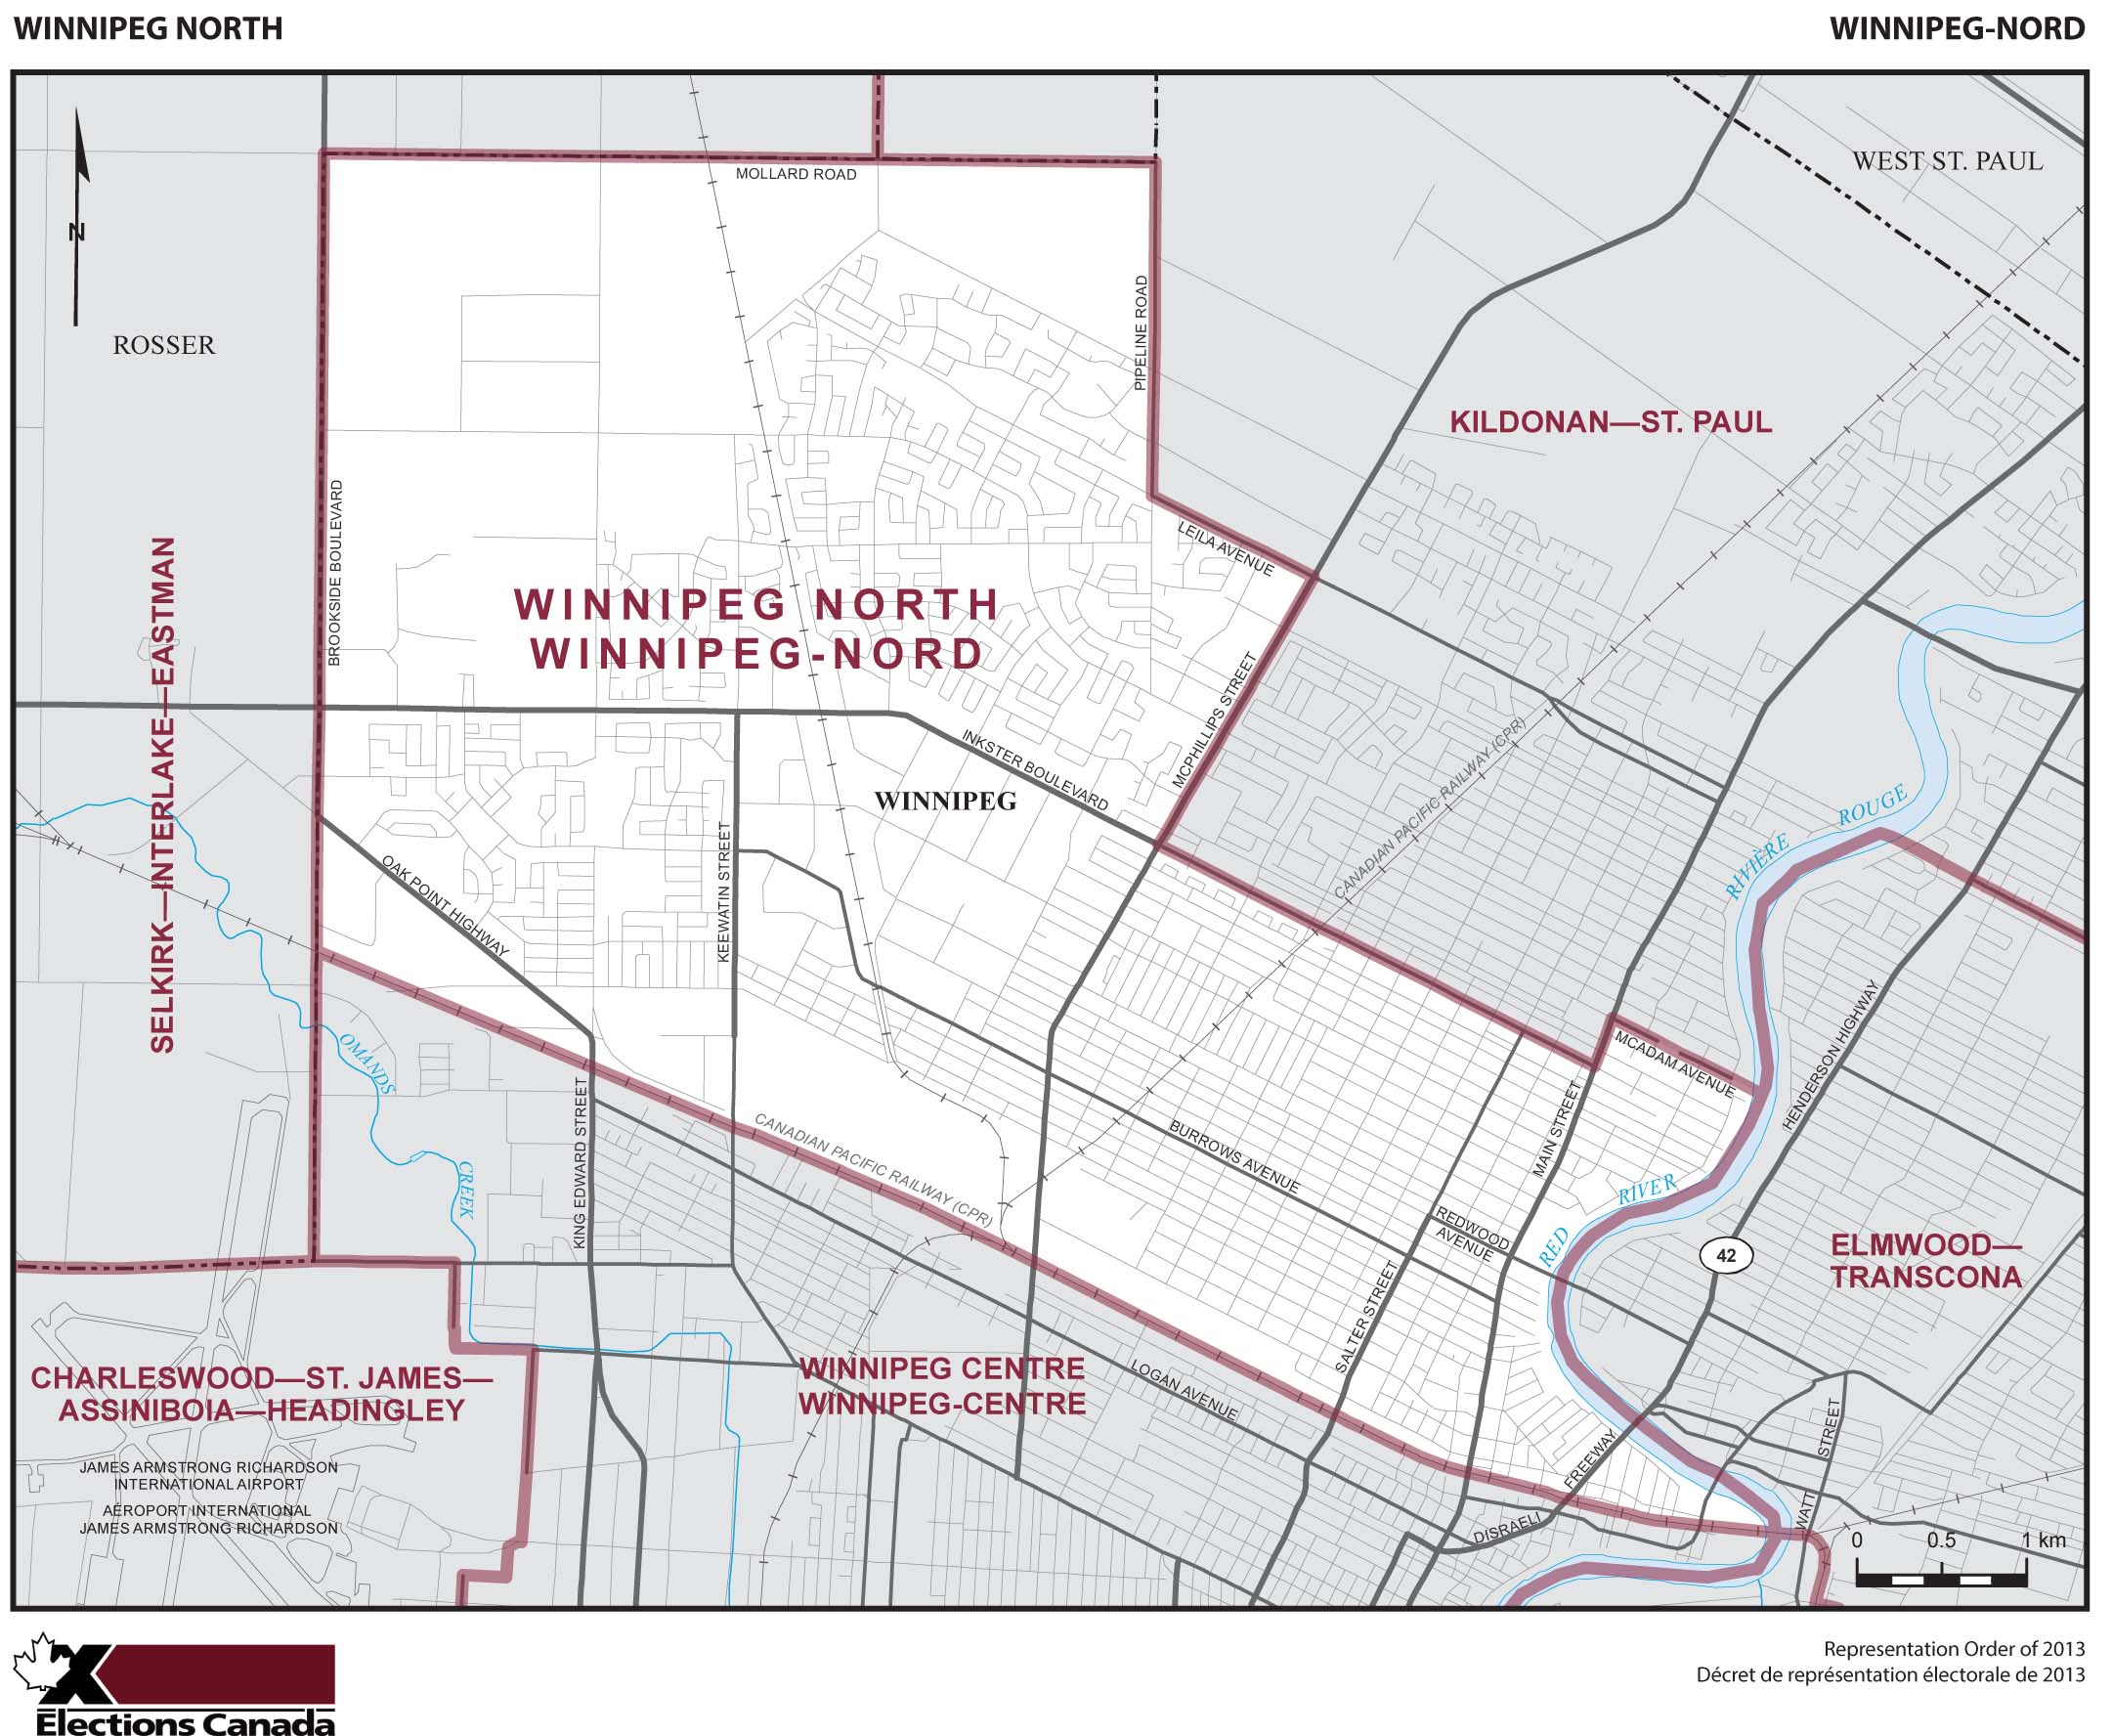 Map: Winnipeg North, Federal electoral district, 2013 Representation Order (in white), Manitoba